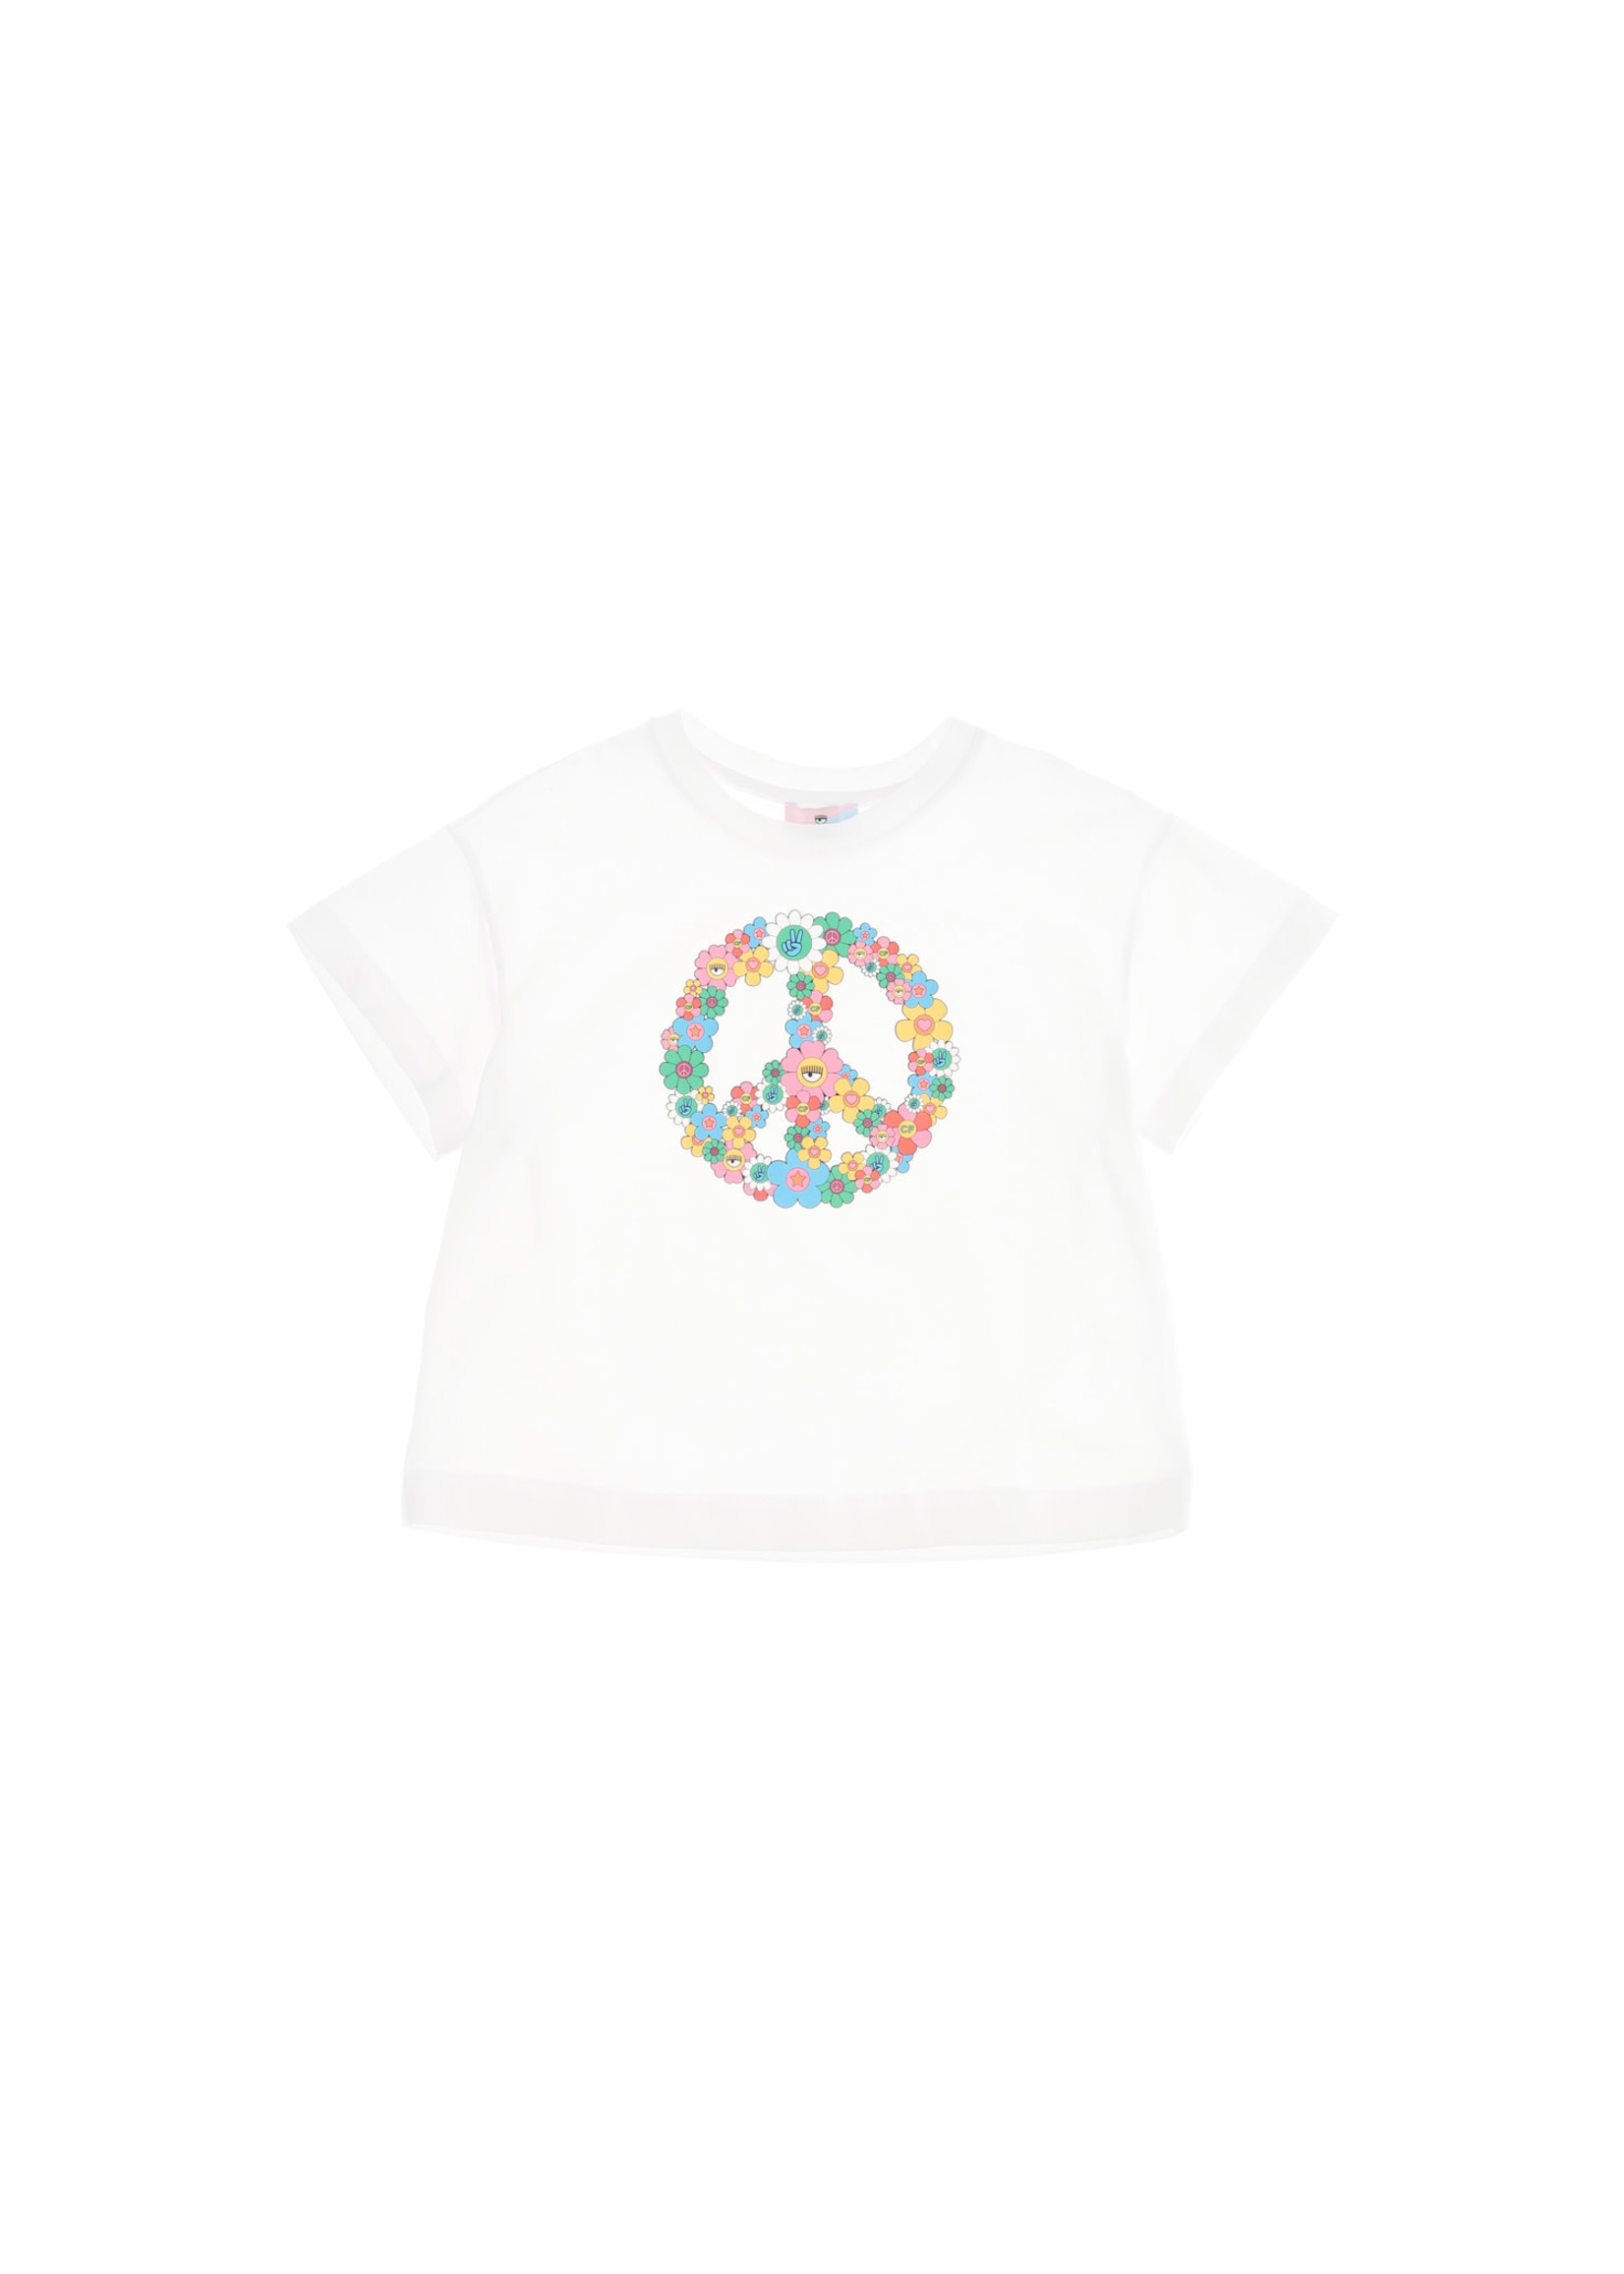 Chiara Ferragni by Monnalisa Chiara Ferragni Girl t-shirt white 'peace flowers' - 519617